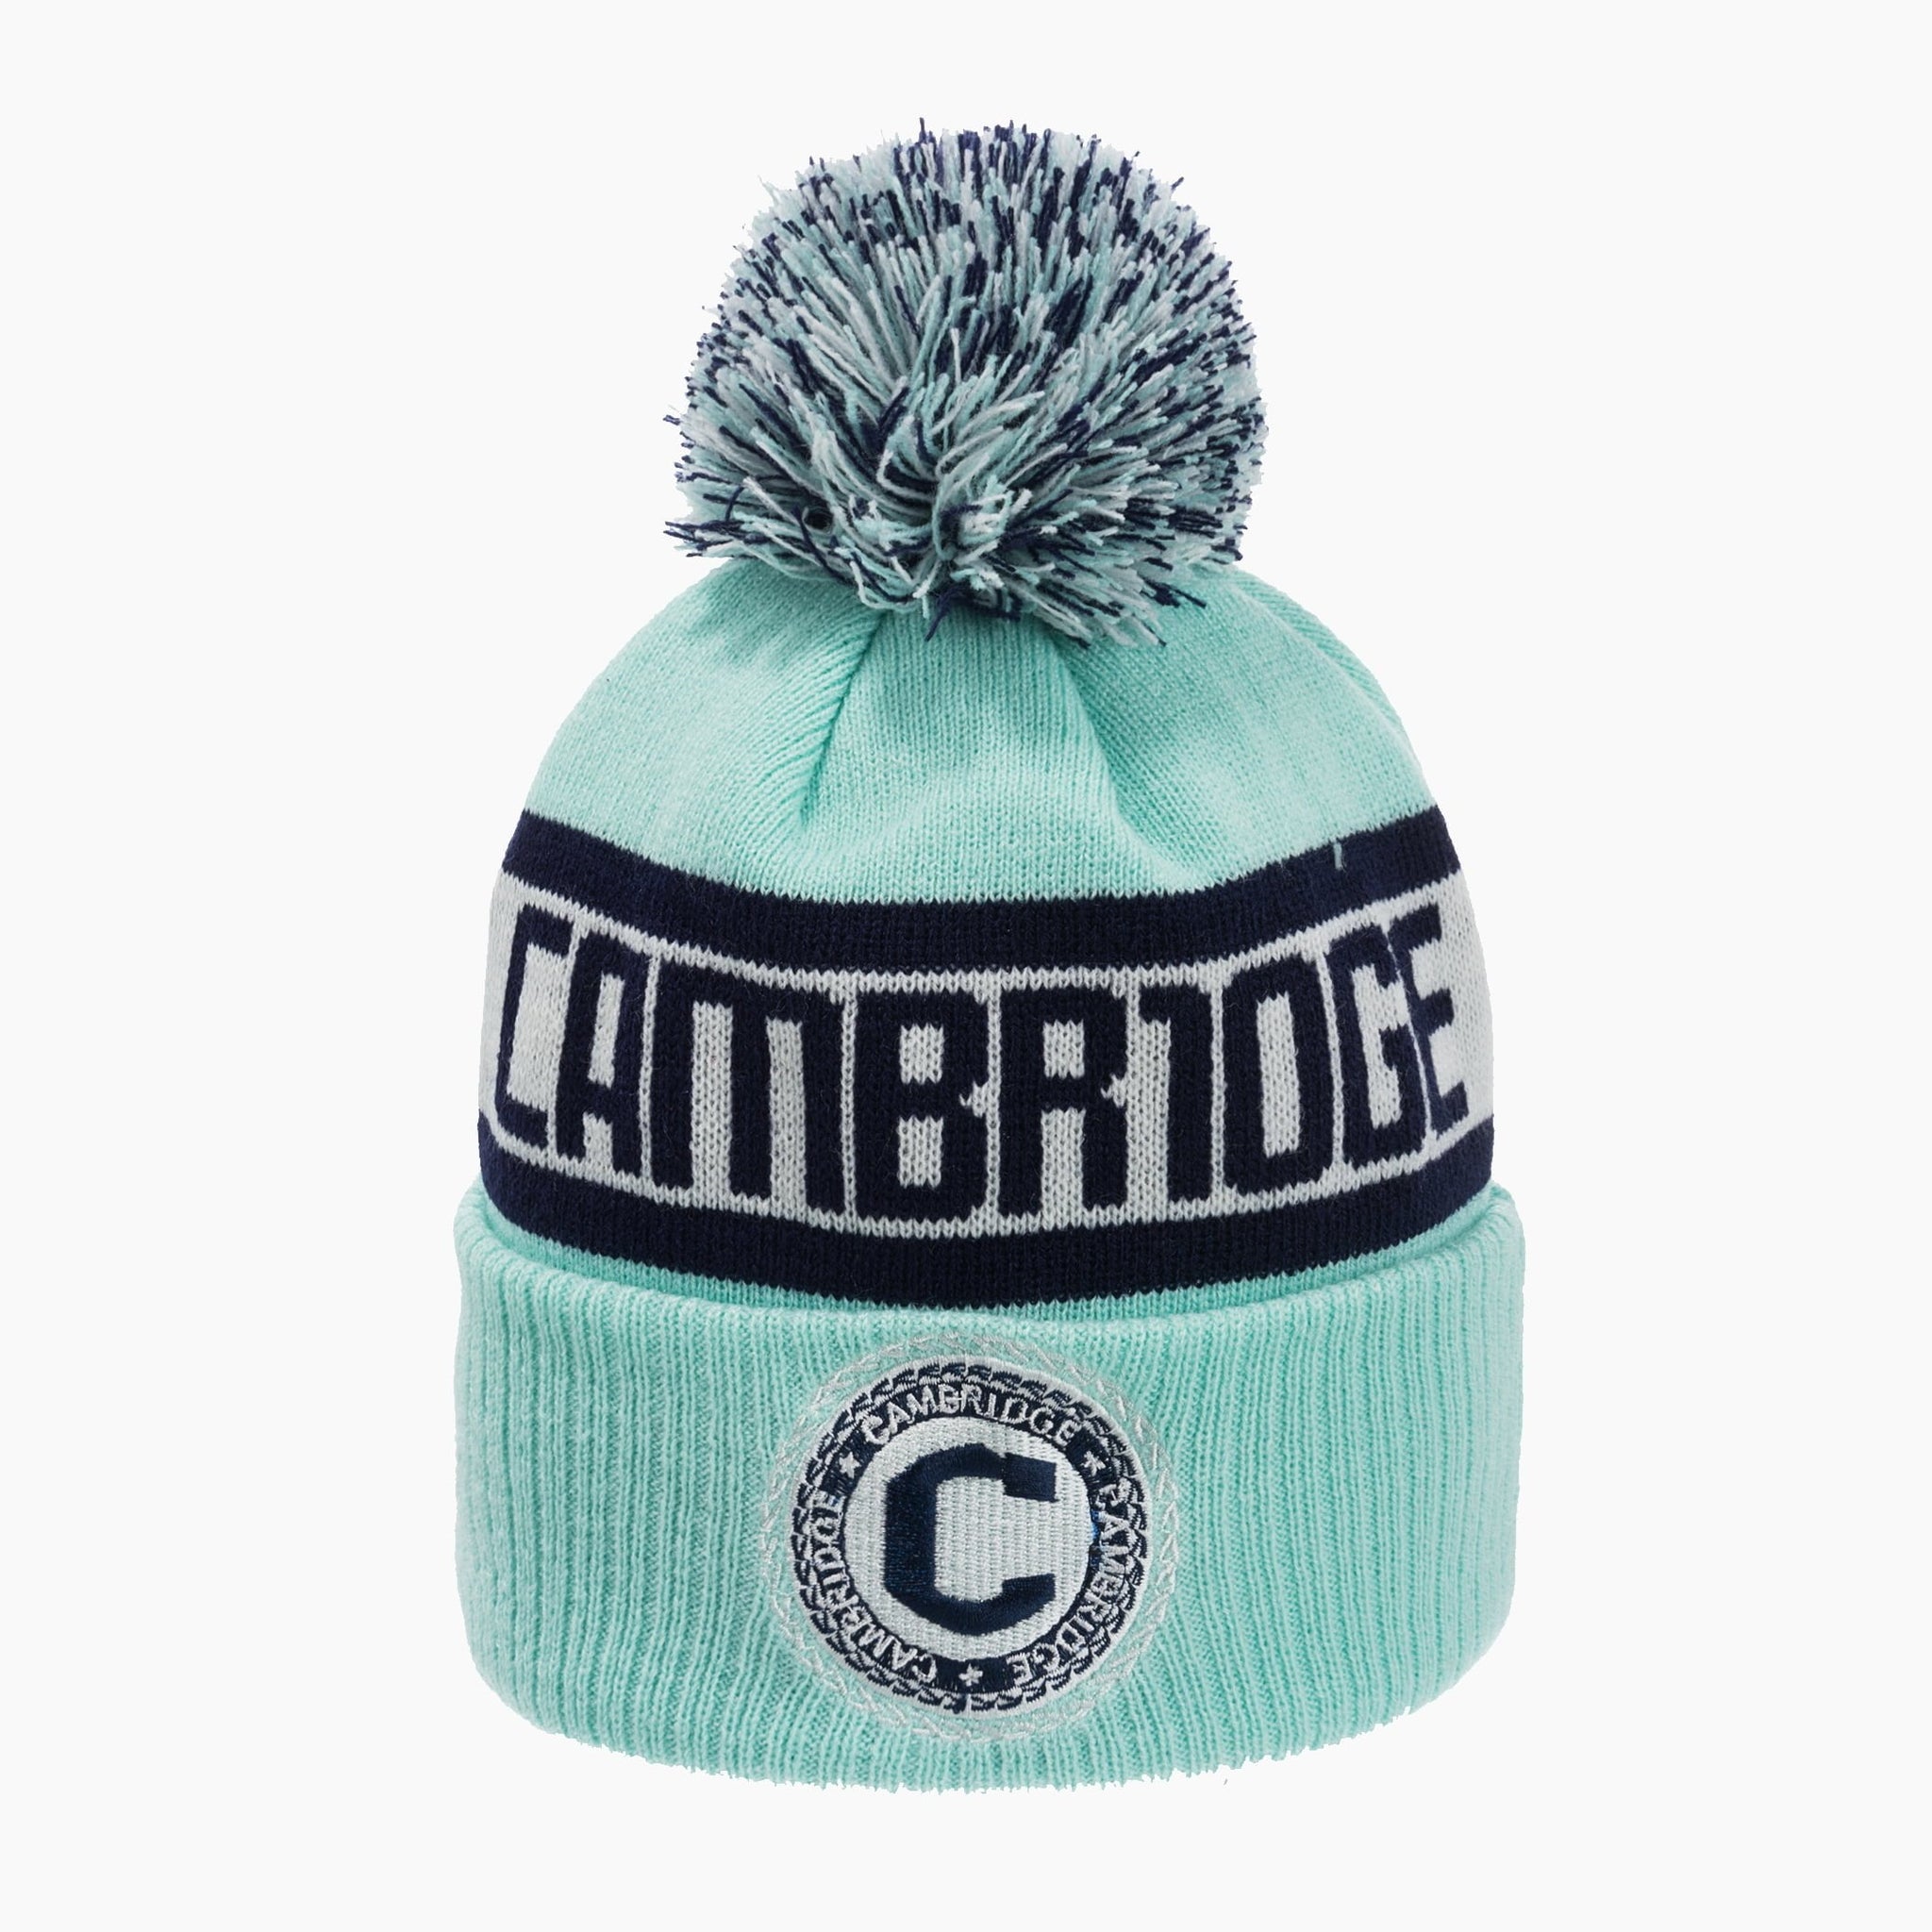 Cambridge Winter hat - Robin Ruth